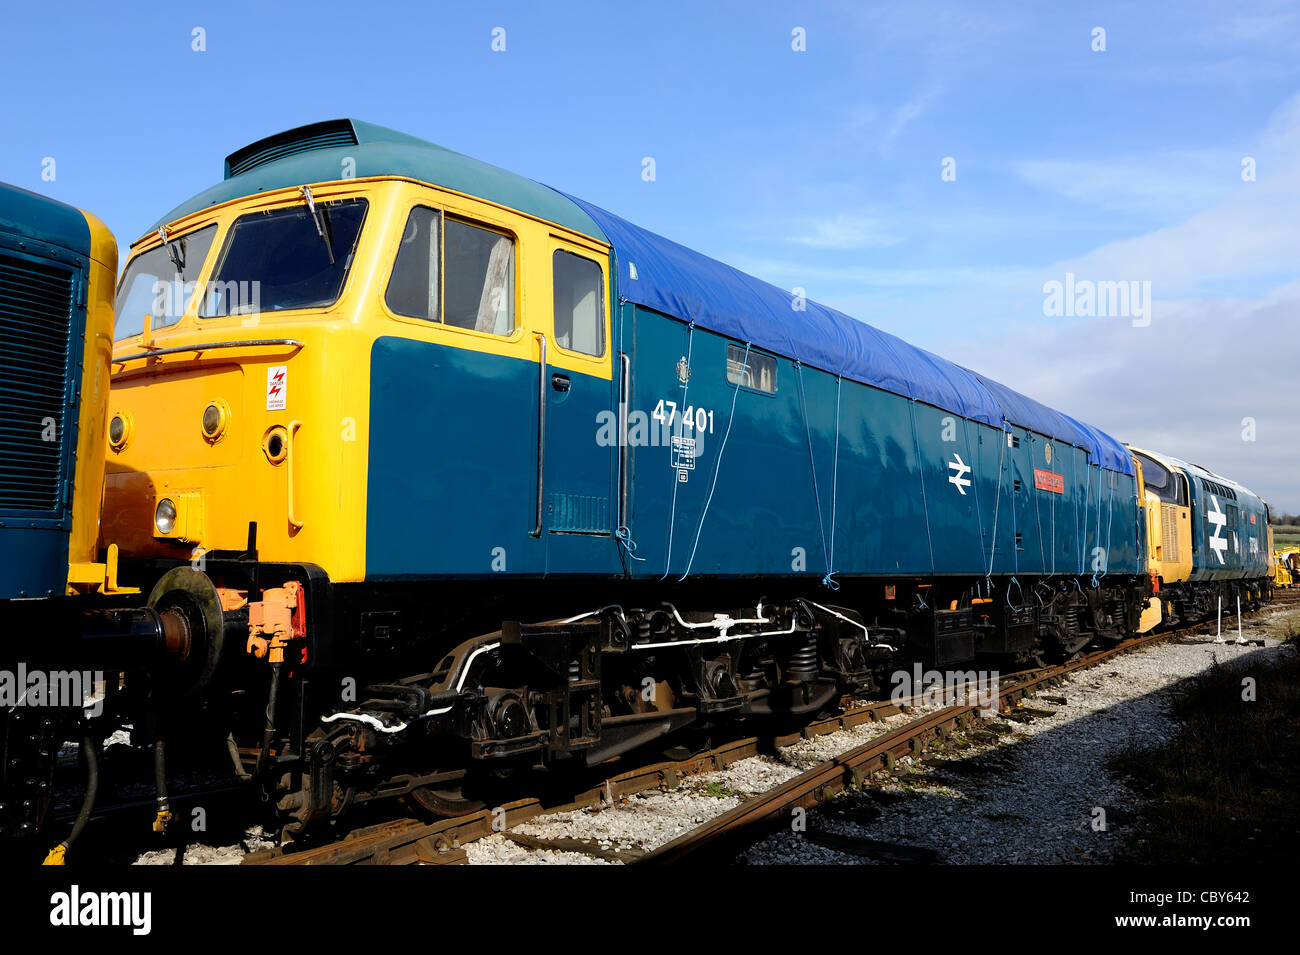 47401 Brush Type 4 diesel locomotive on shed at the midland railway centre derbyshire england uk Stock Photo